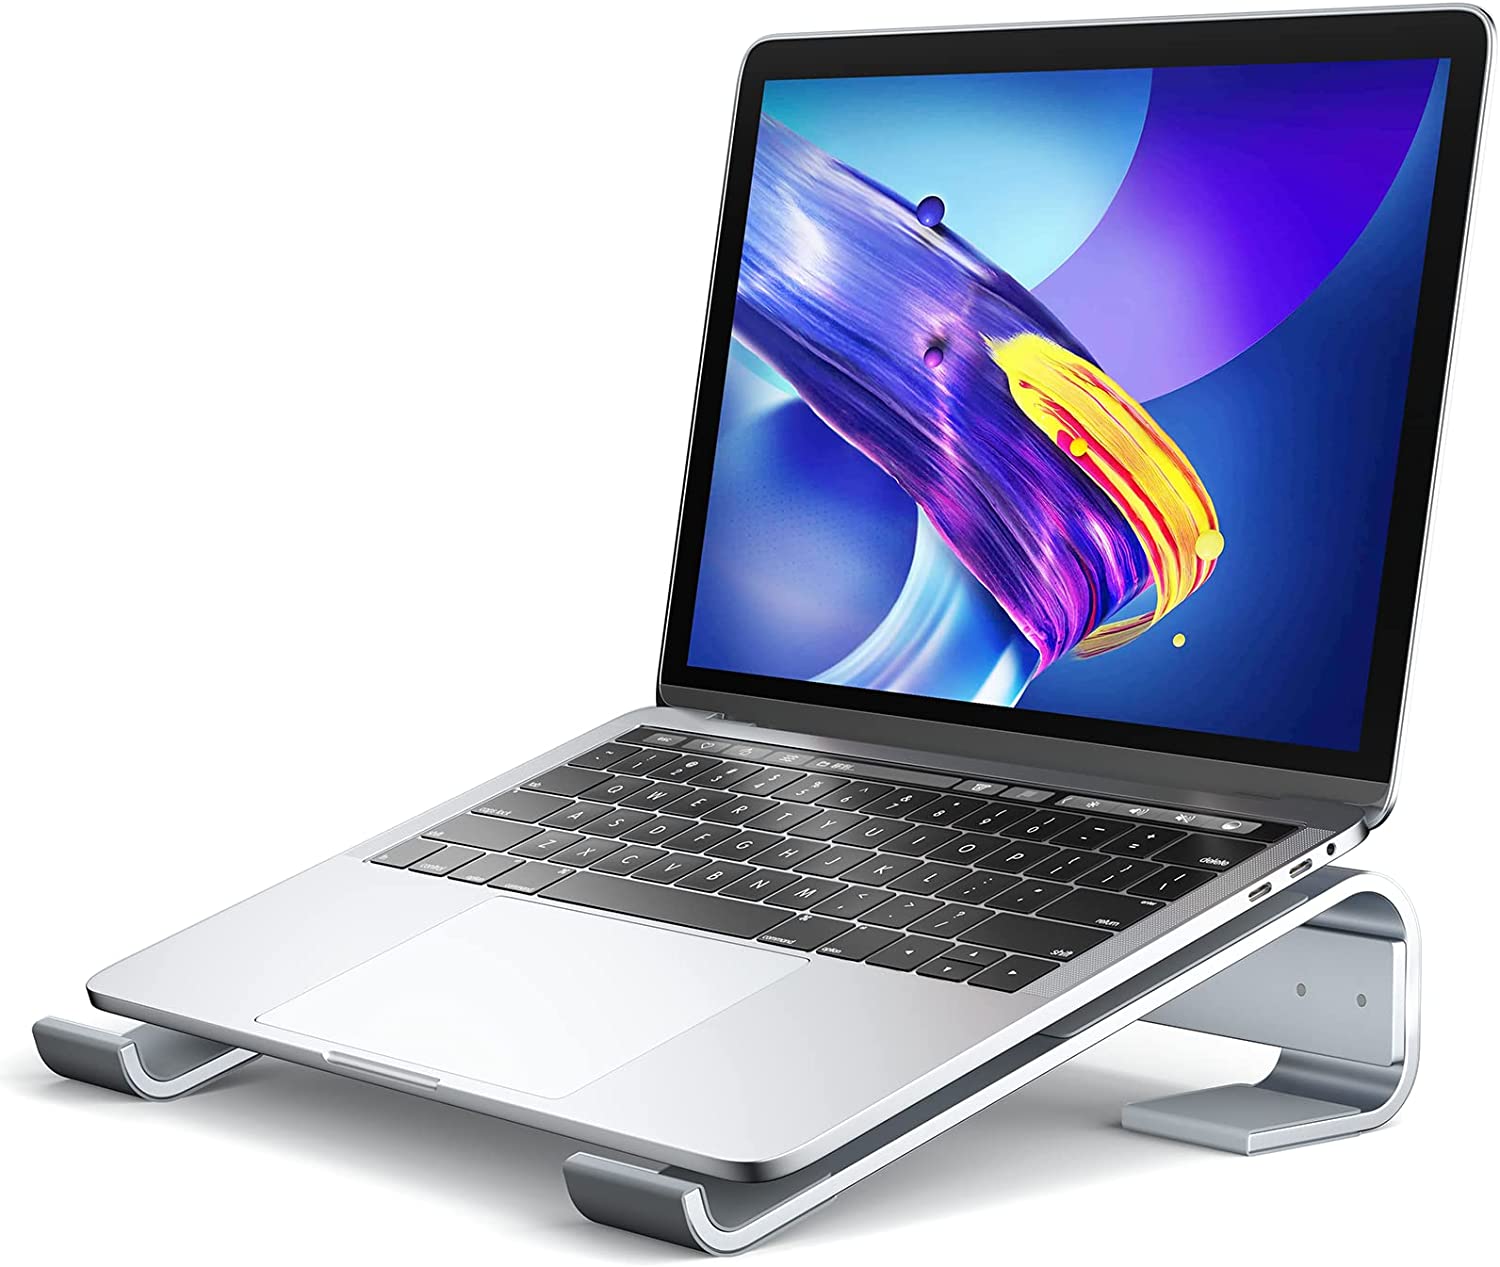 Laptop-Accessories-FRUITFUL-Portable-Laptop-Stand-Aluminium-Laptop-Mounts-Ergonomic-Laptop-Holder-Compatible-with-MacBook-Notebook-Laptops-10-17-Silver-3